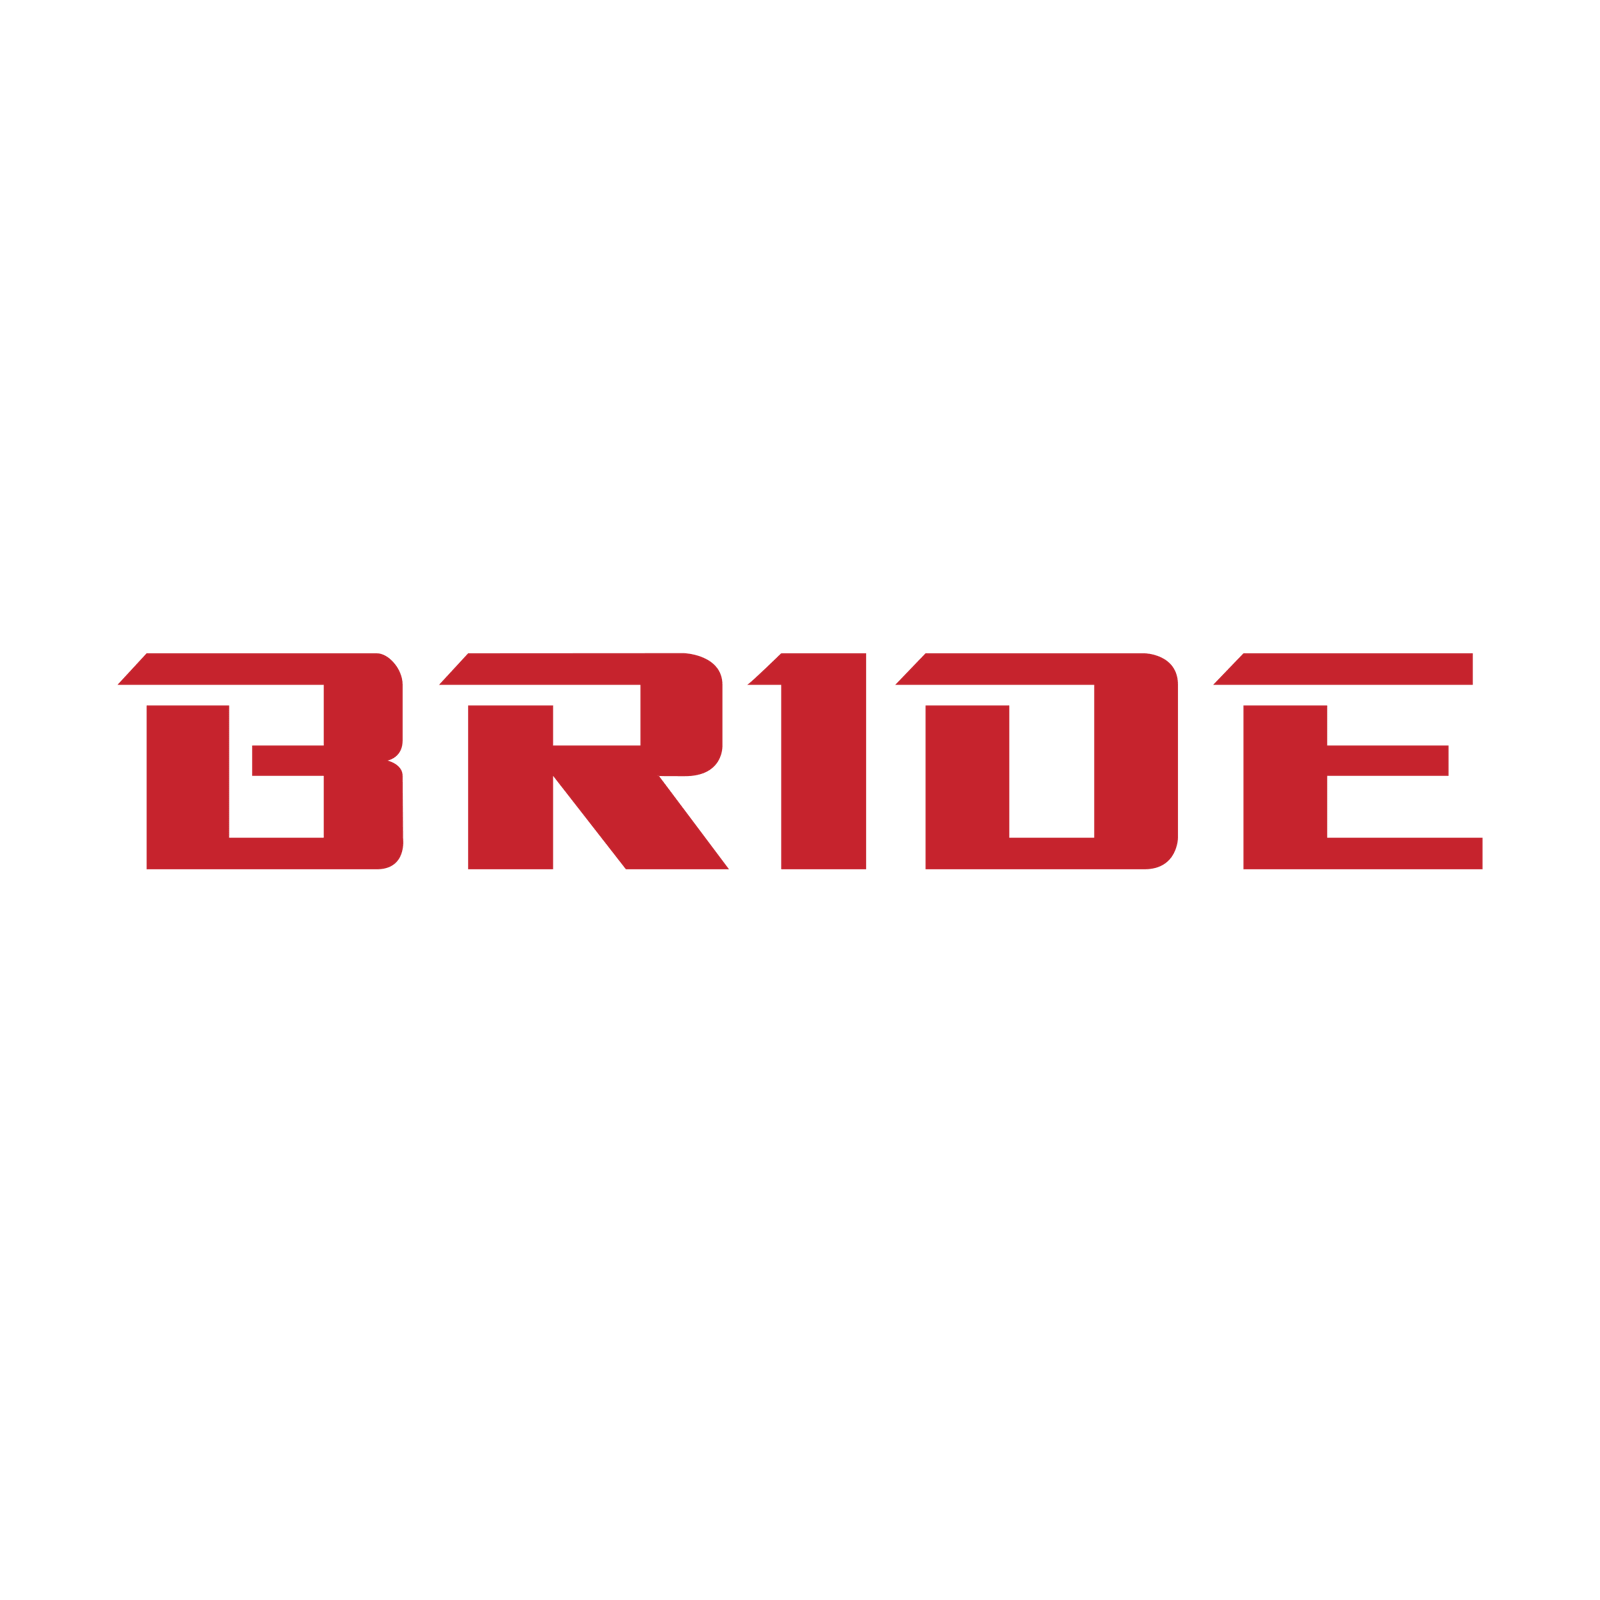 Custom Bride and Groom Wedding Logo Name Design for Signs or Gobo - Etsy